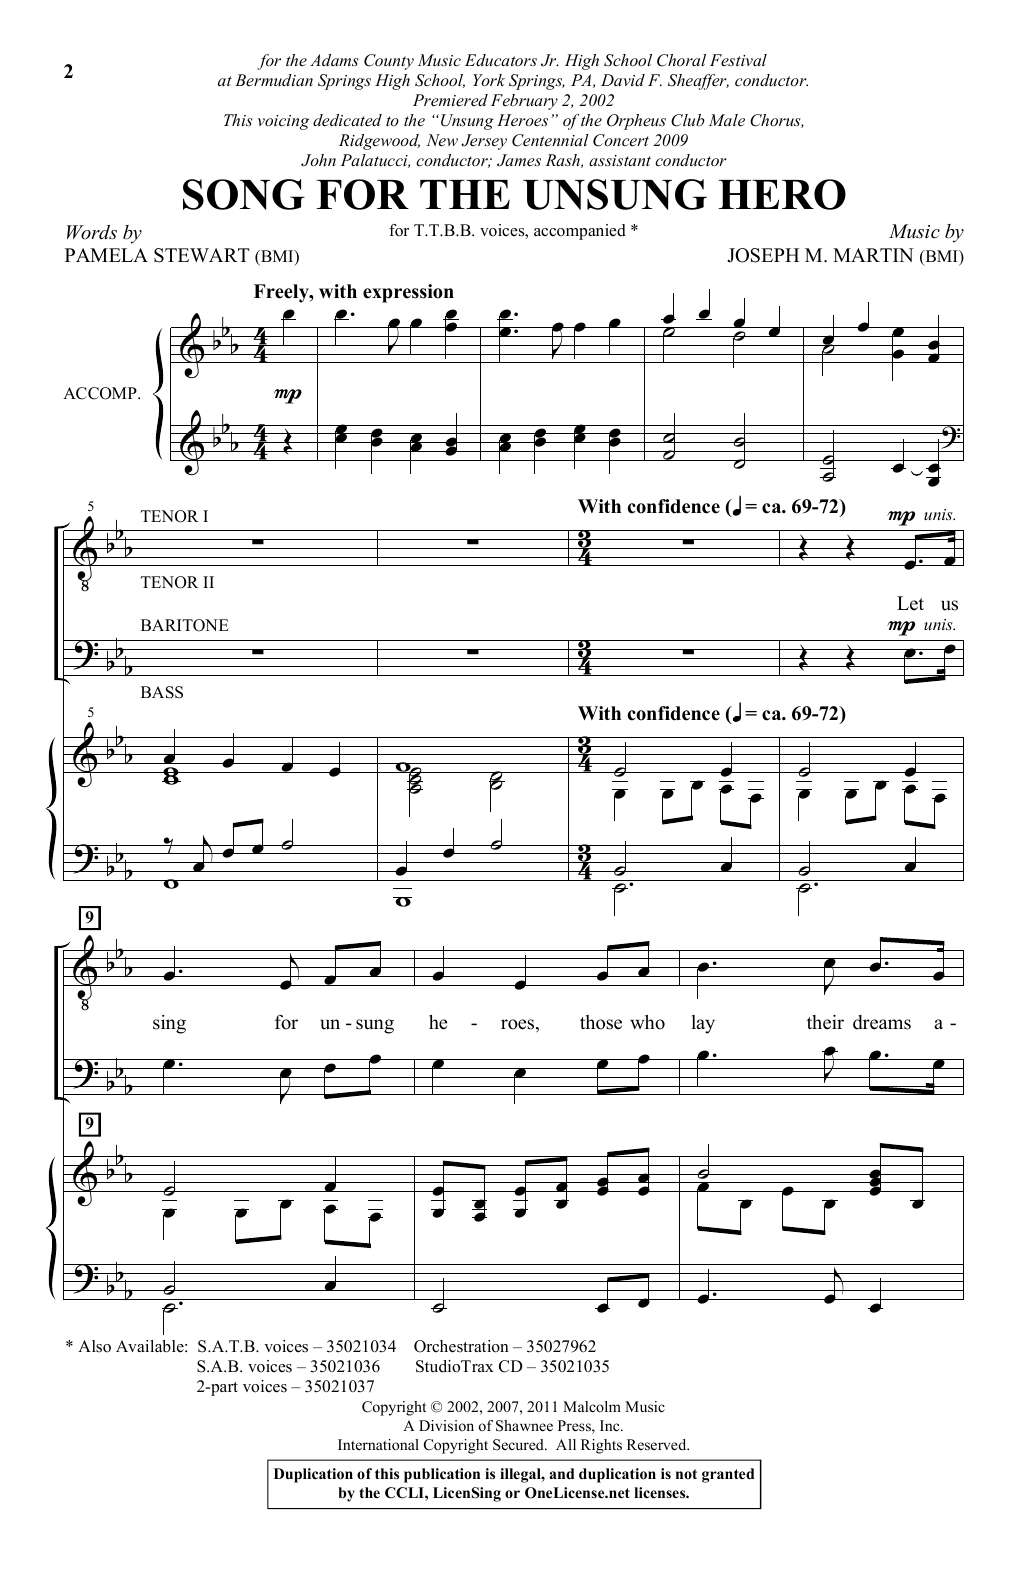 Pamela Stewart & Joseph M. Martin Song For The Unsung Hero Sheet Music Notes & Chords for TTBB Choir - Download or Print PDF